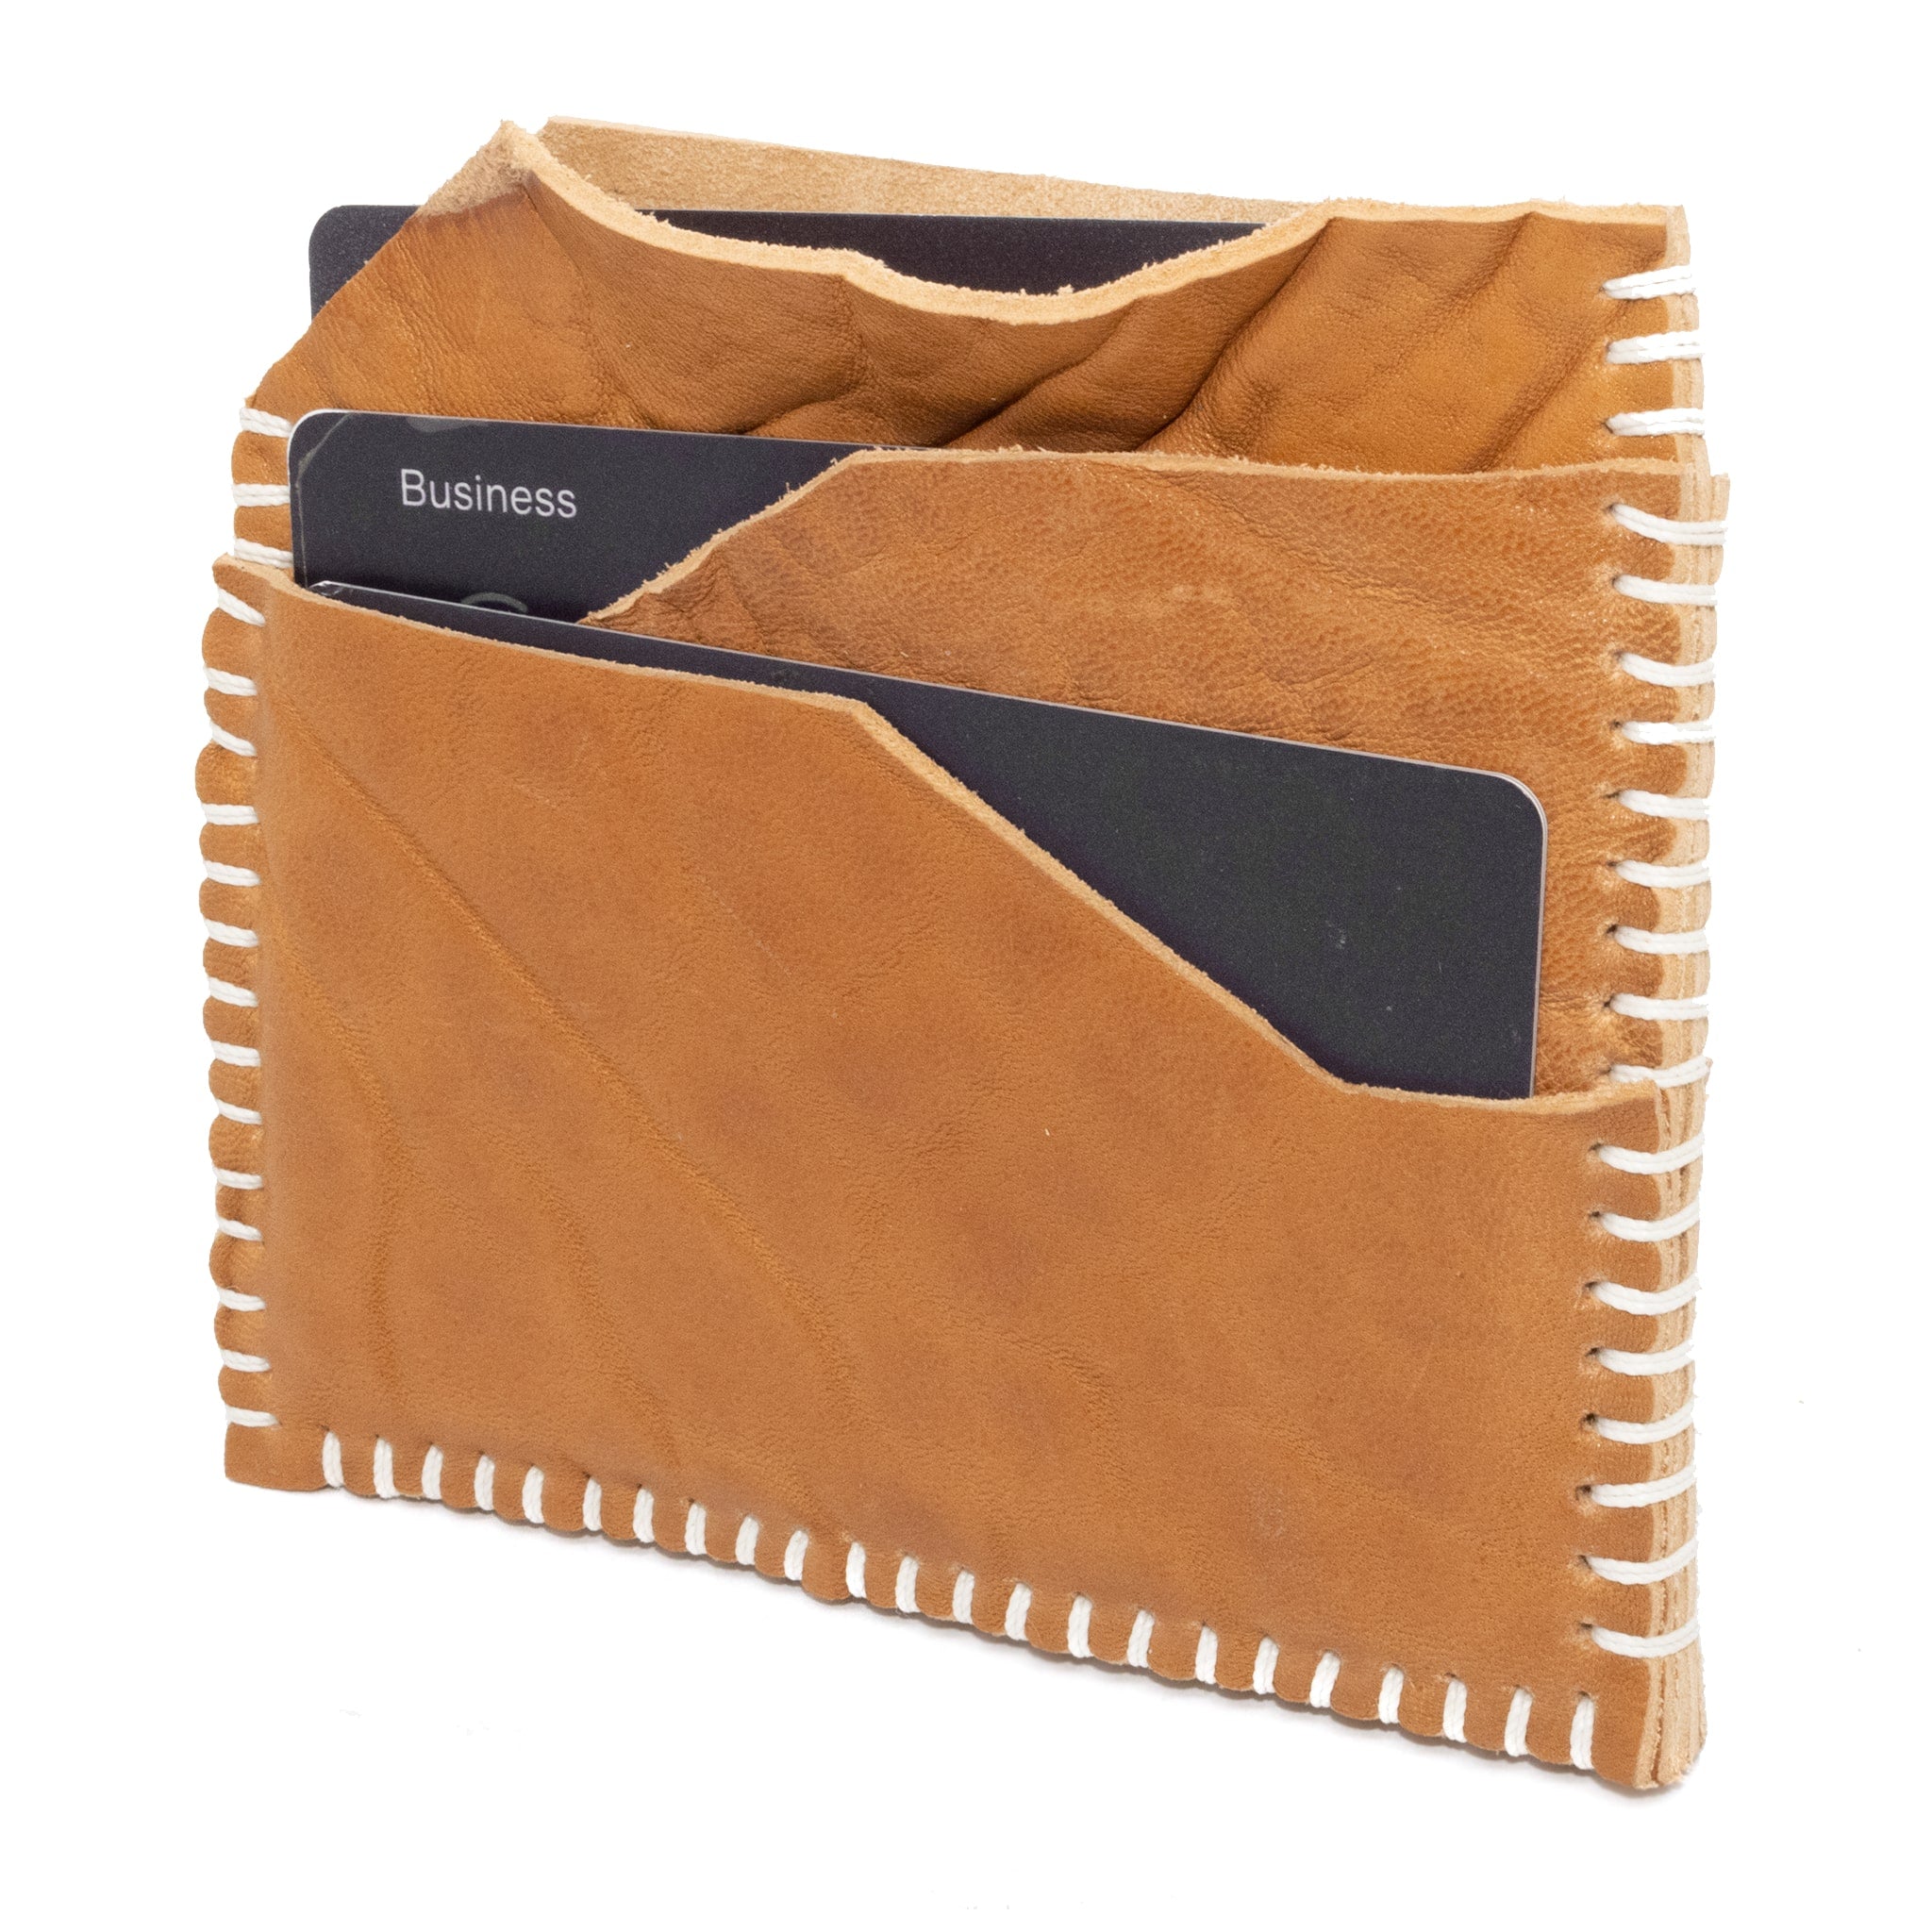 natural horse culatta leather wedge cardholder | atelier skn